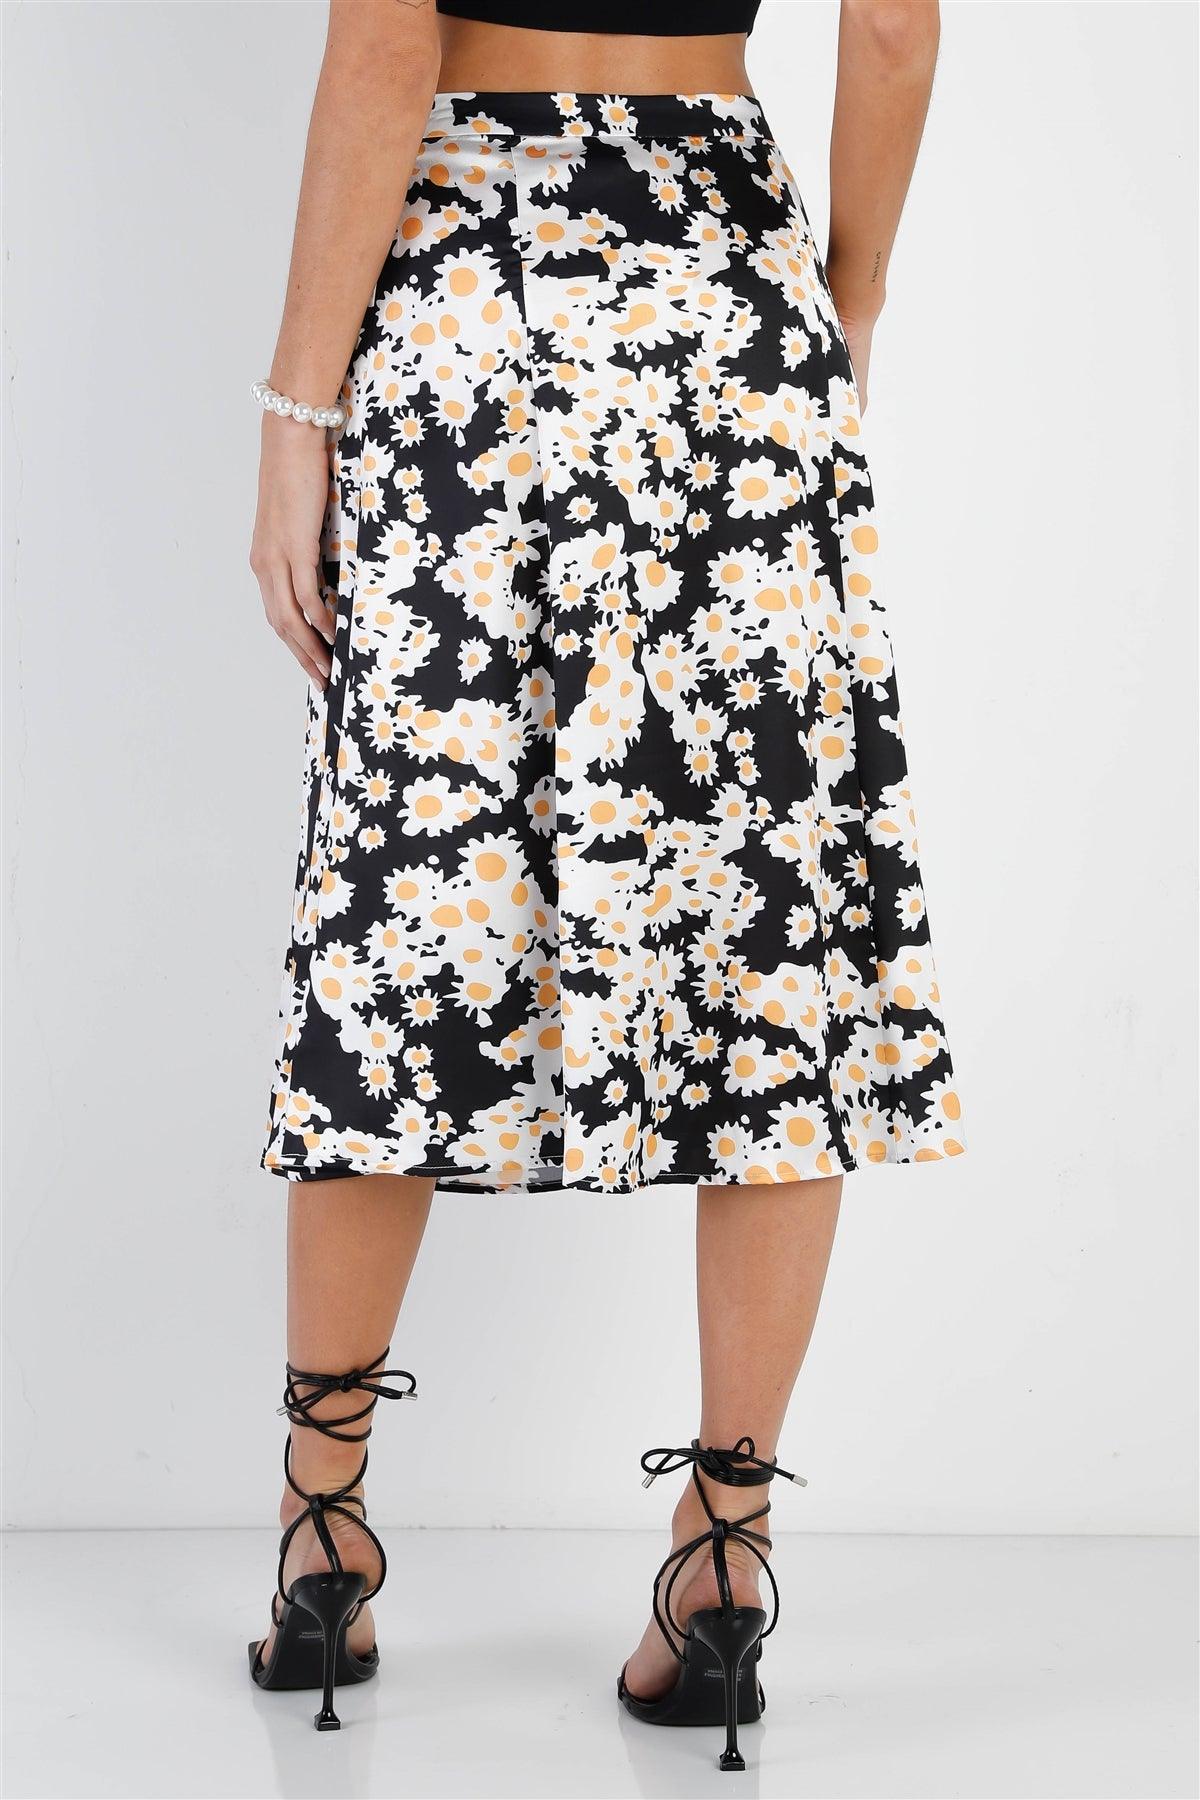 "Daisy" Print Black Multi Color Satin Effect Midi Slip Skirt /1-2-2-1